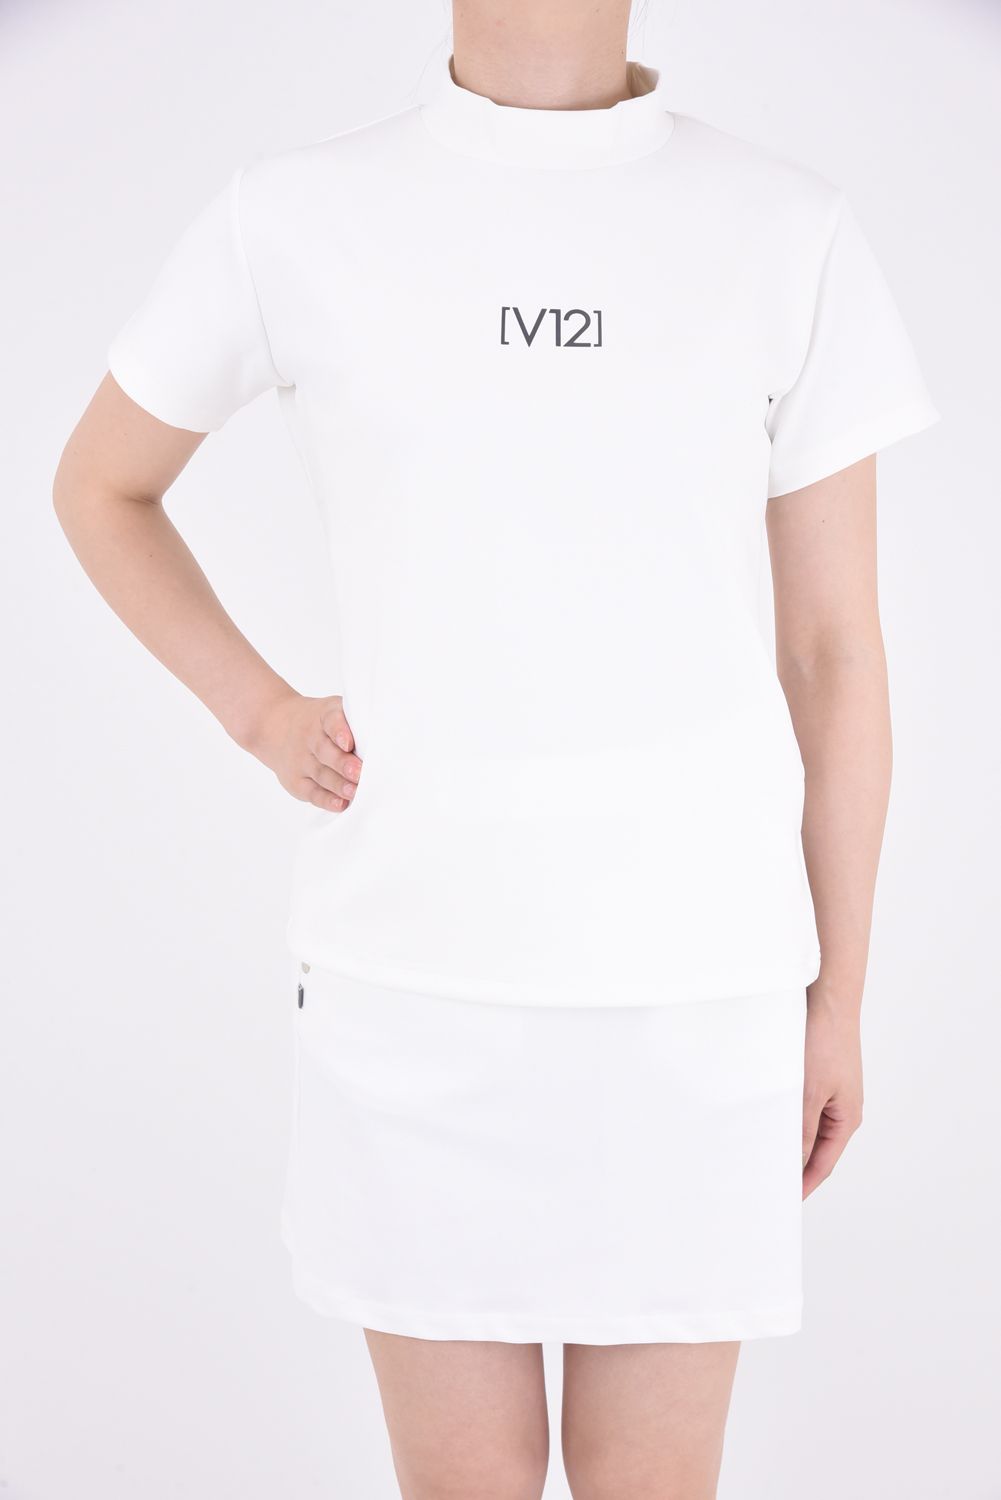 V12 - 【レディース】 TONE MOCK / バックロゴ 半袖 モックネックT